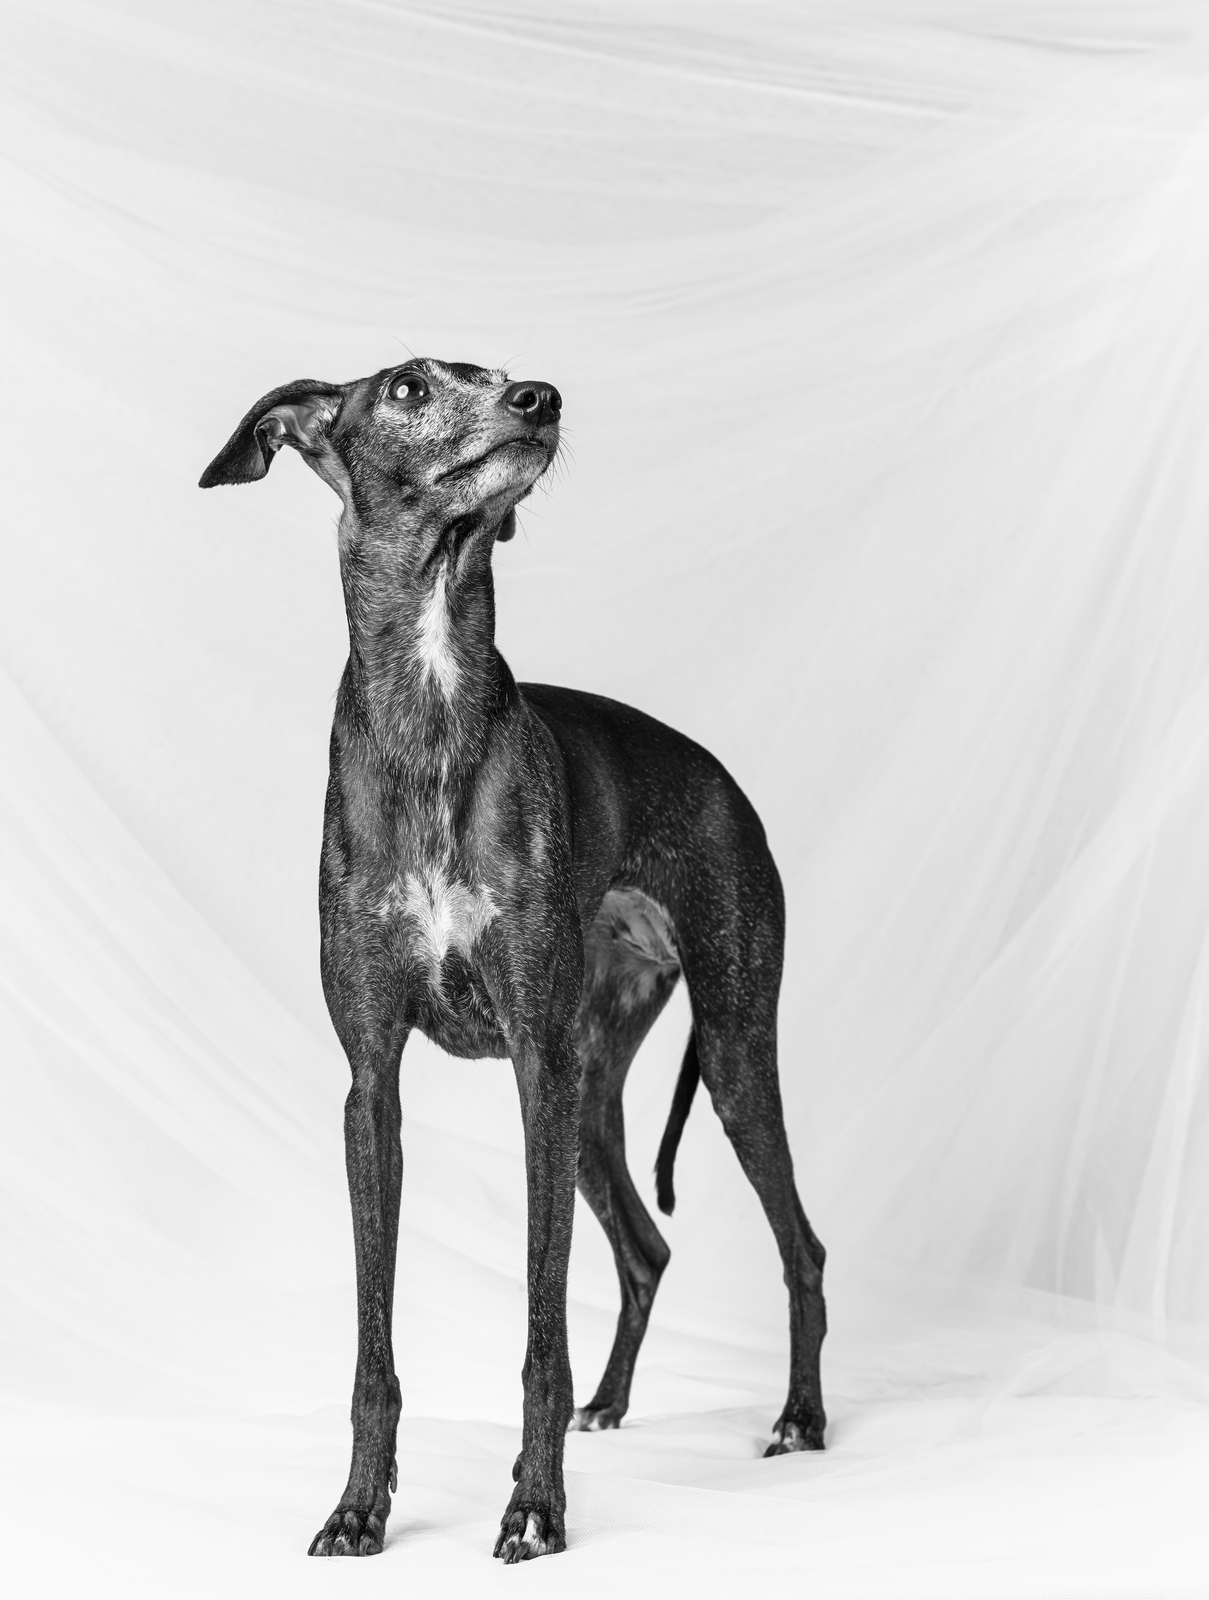 Italian Greyhound - Dog-Breeds.net